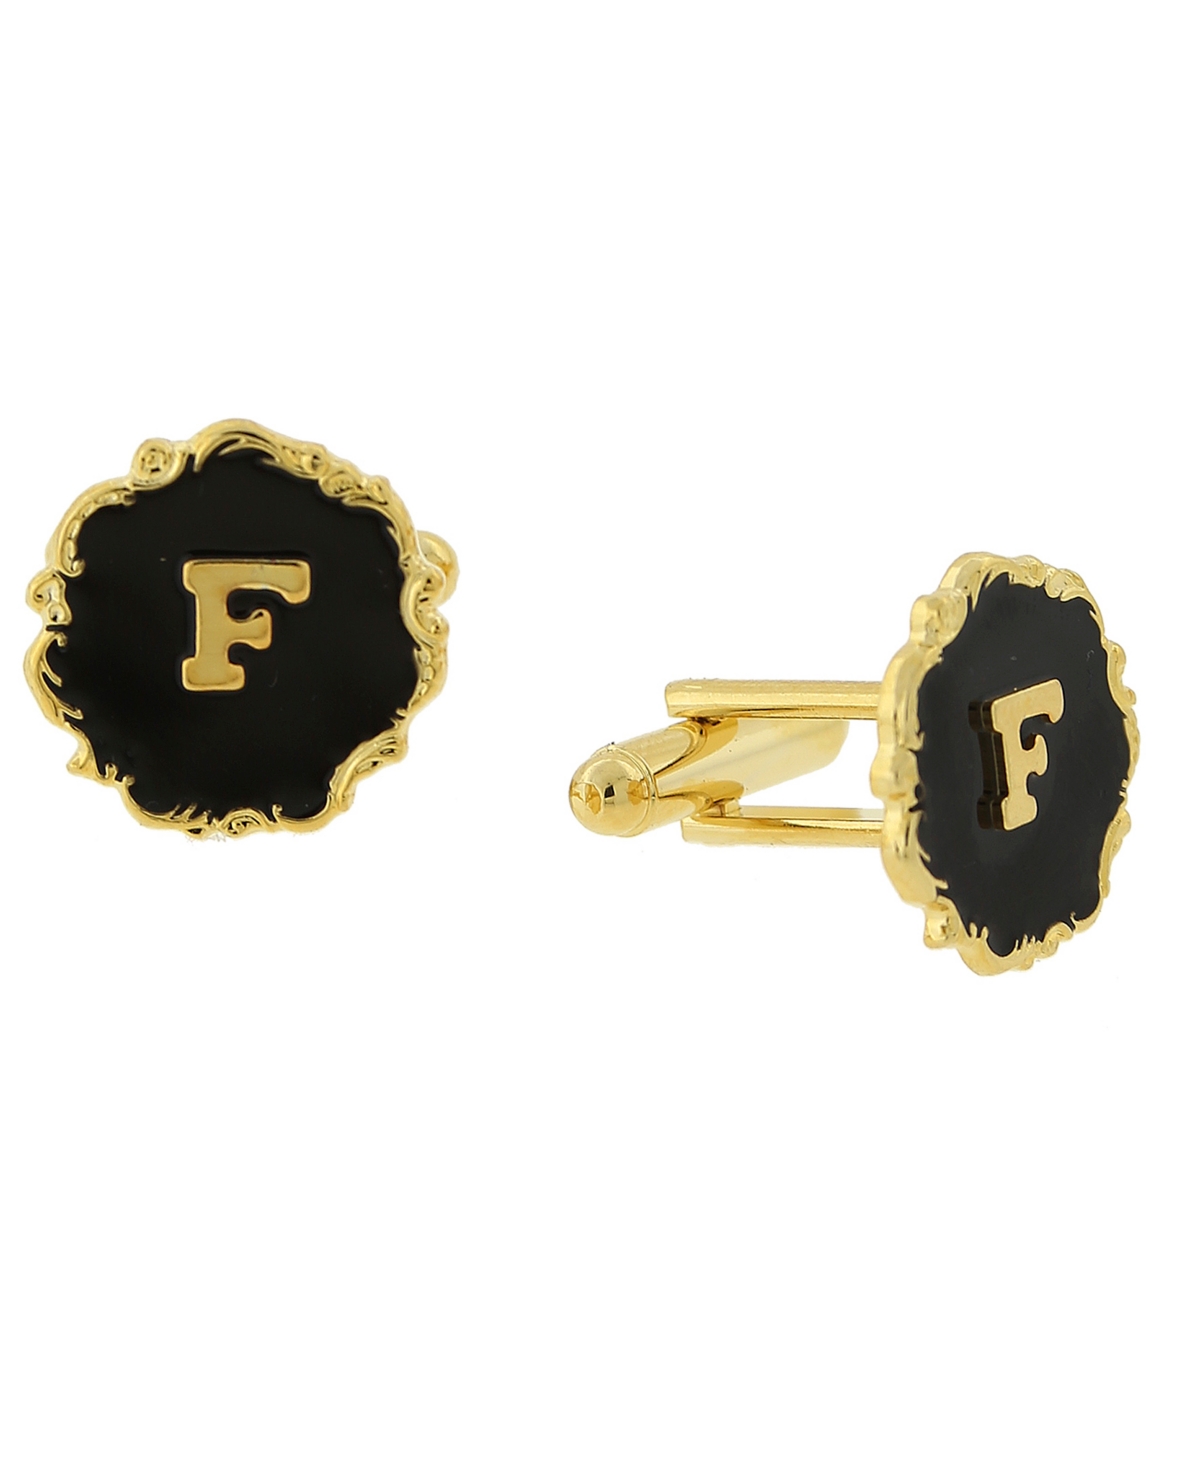 1928 Jewelry 14k Gold-plated Enamel Initial F Cufflinks In Black